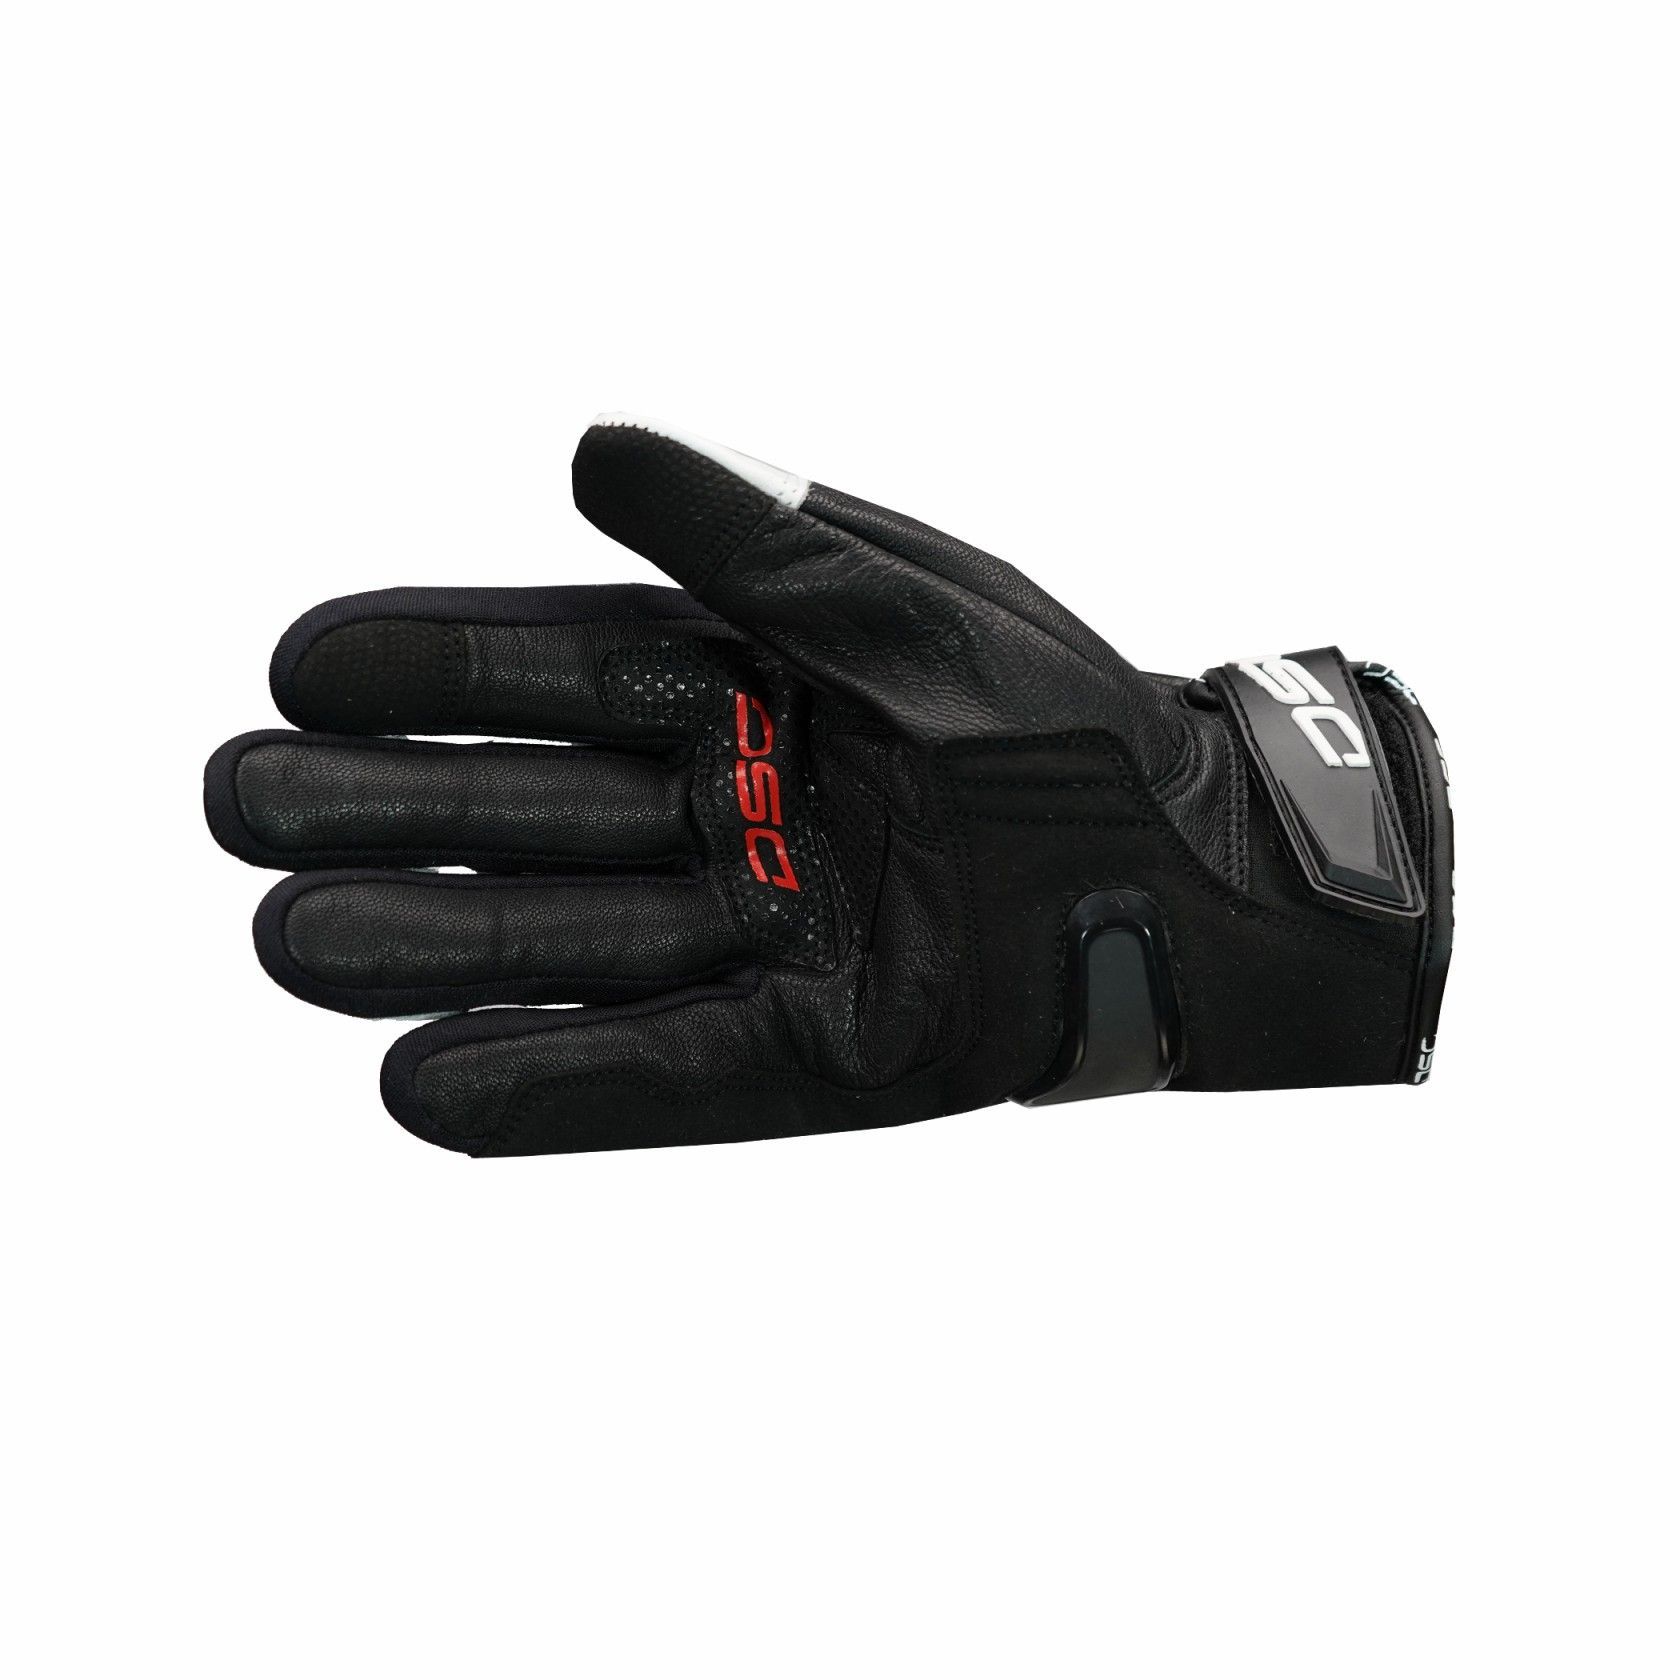 DSG CARBON X Glove Black White